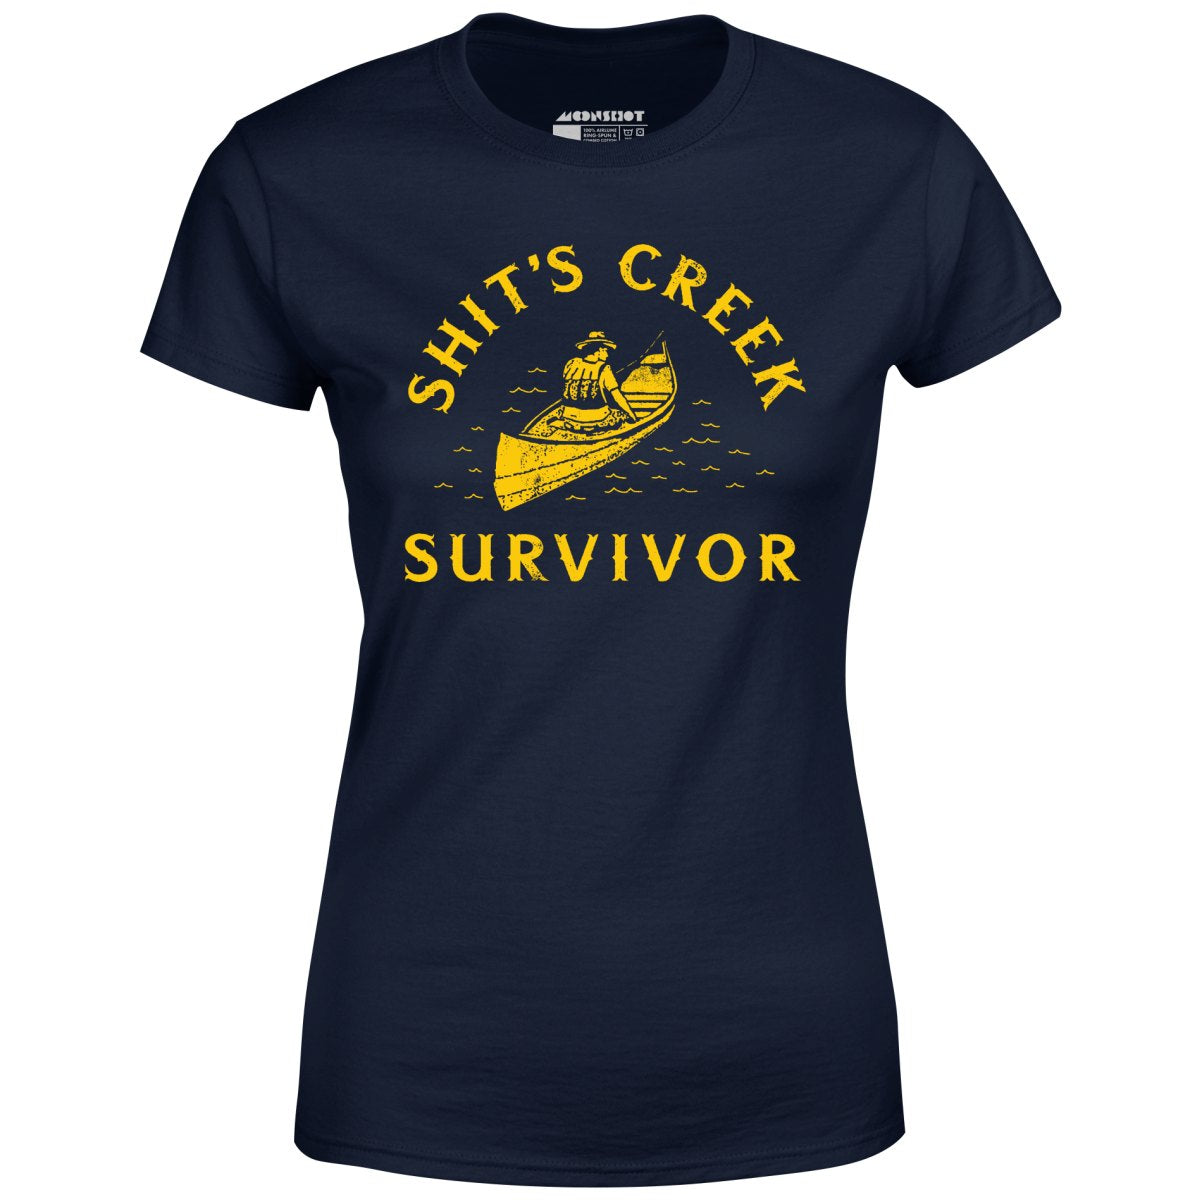 Shit's Creek Survivor - Women's T-Shirt